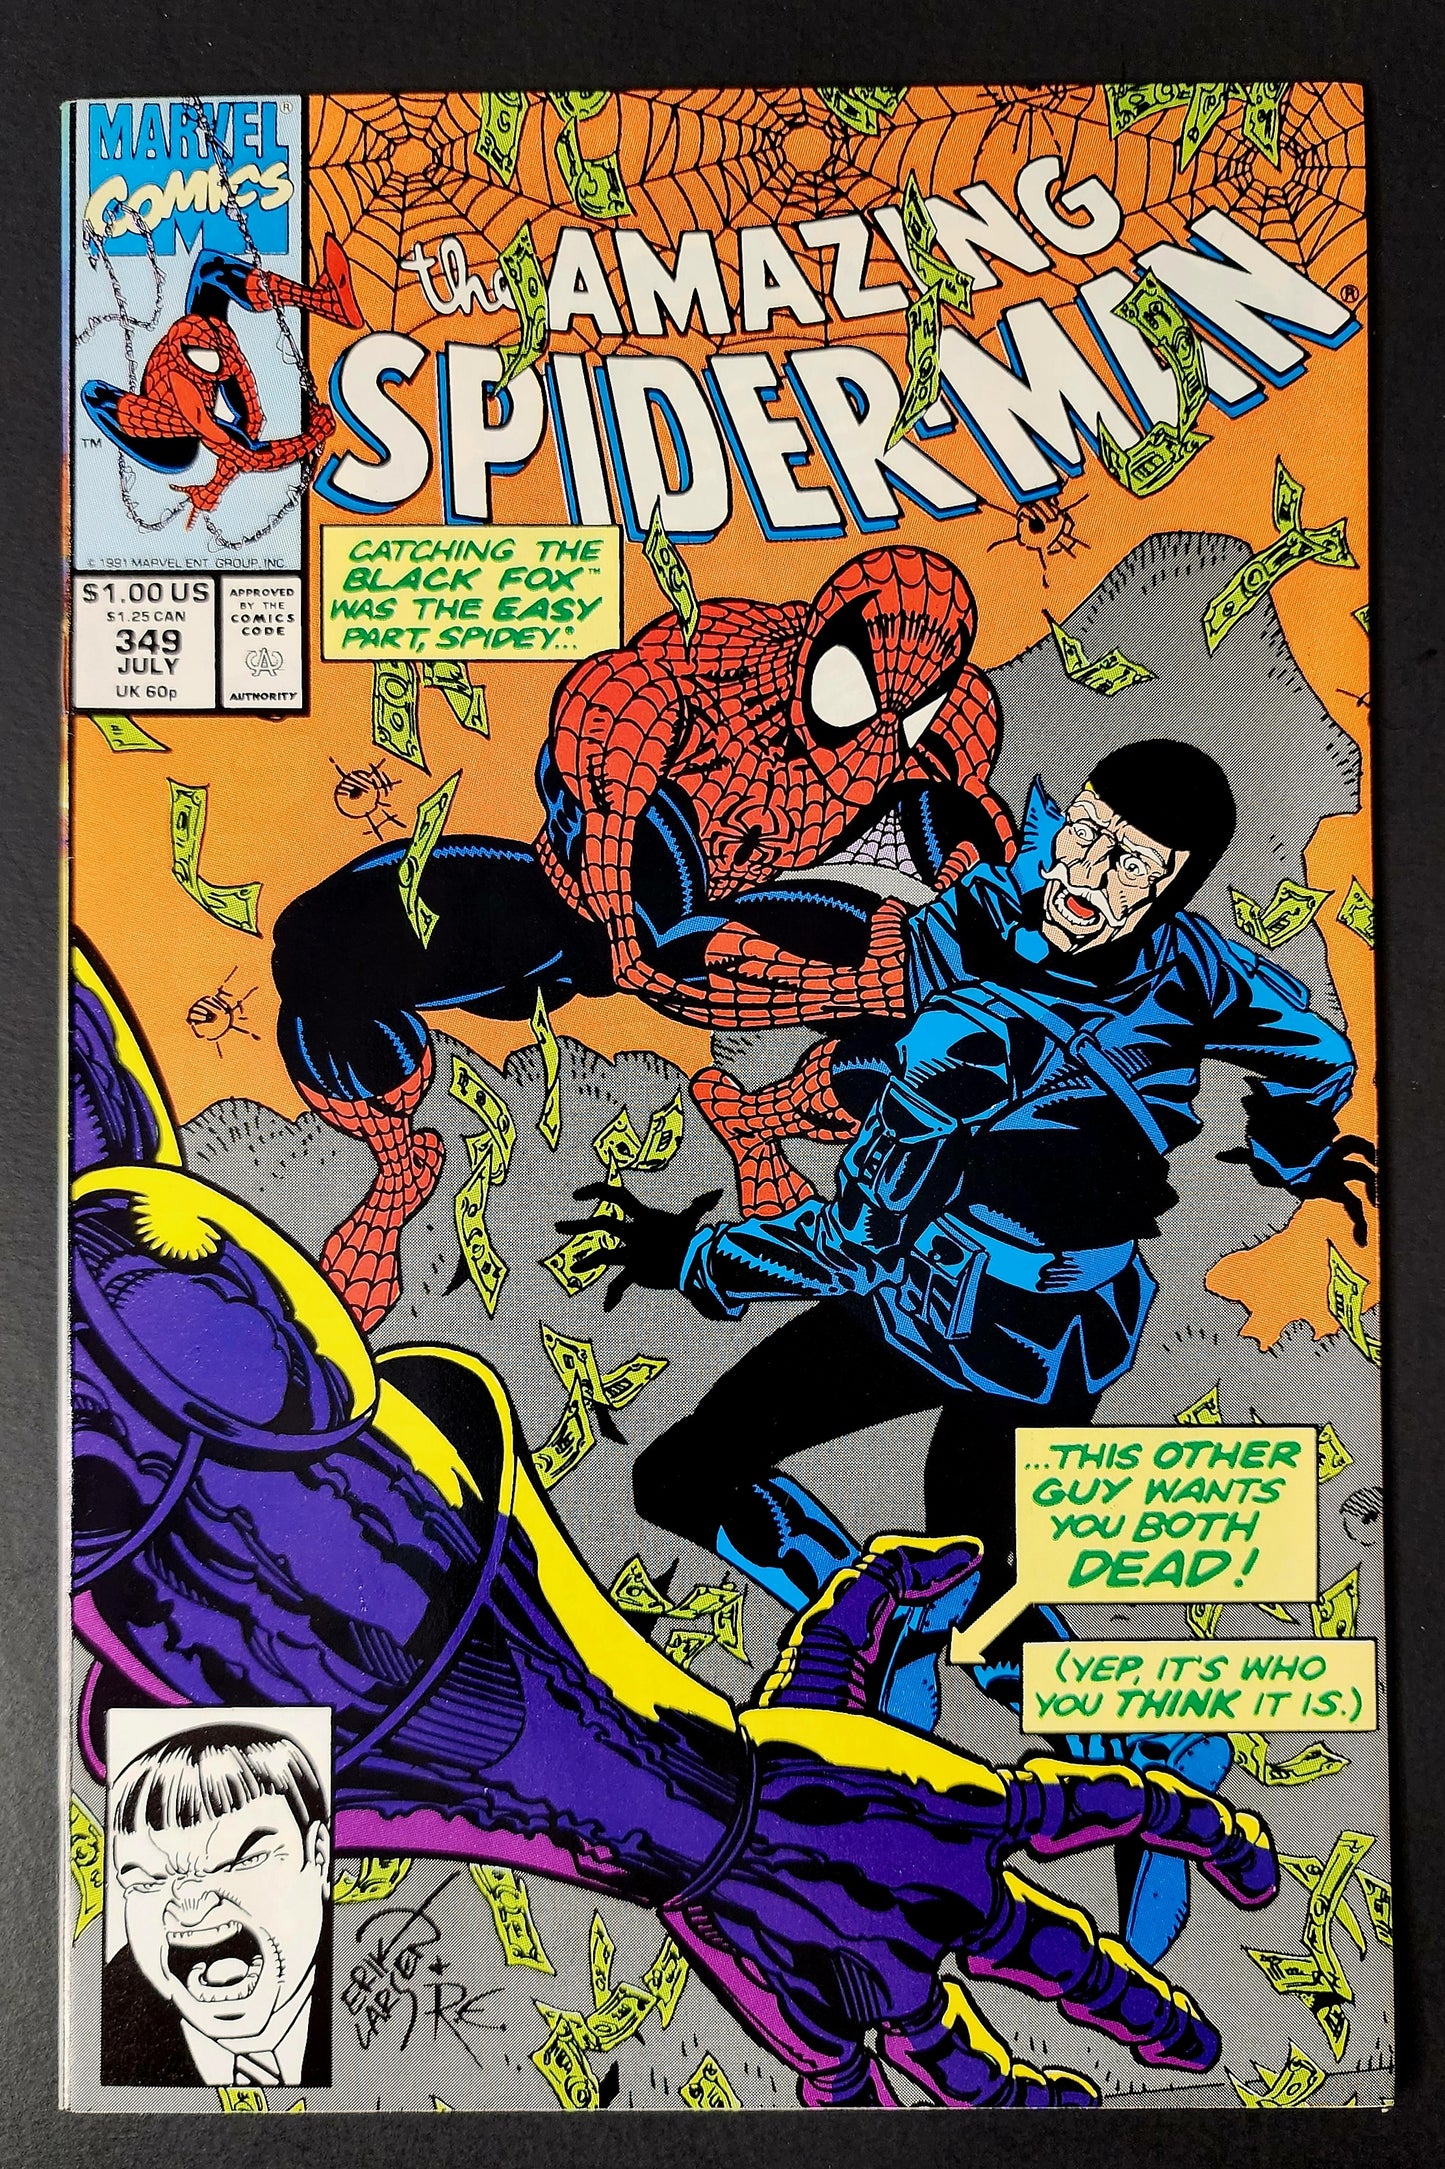 Amazing Spider-Man #349 (VF-)